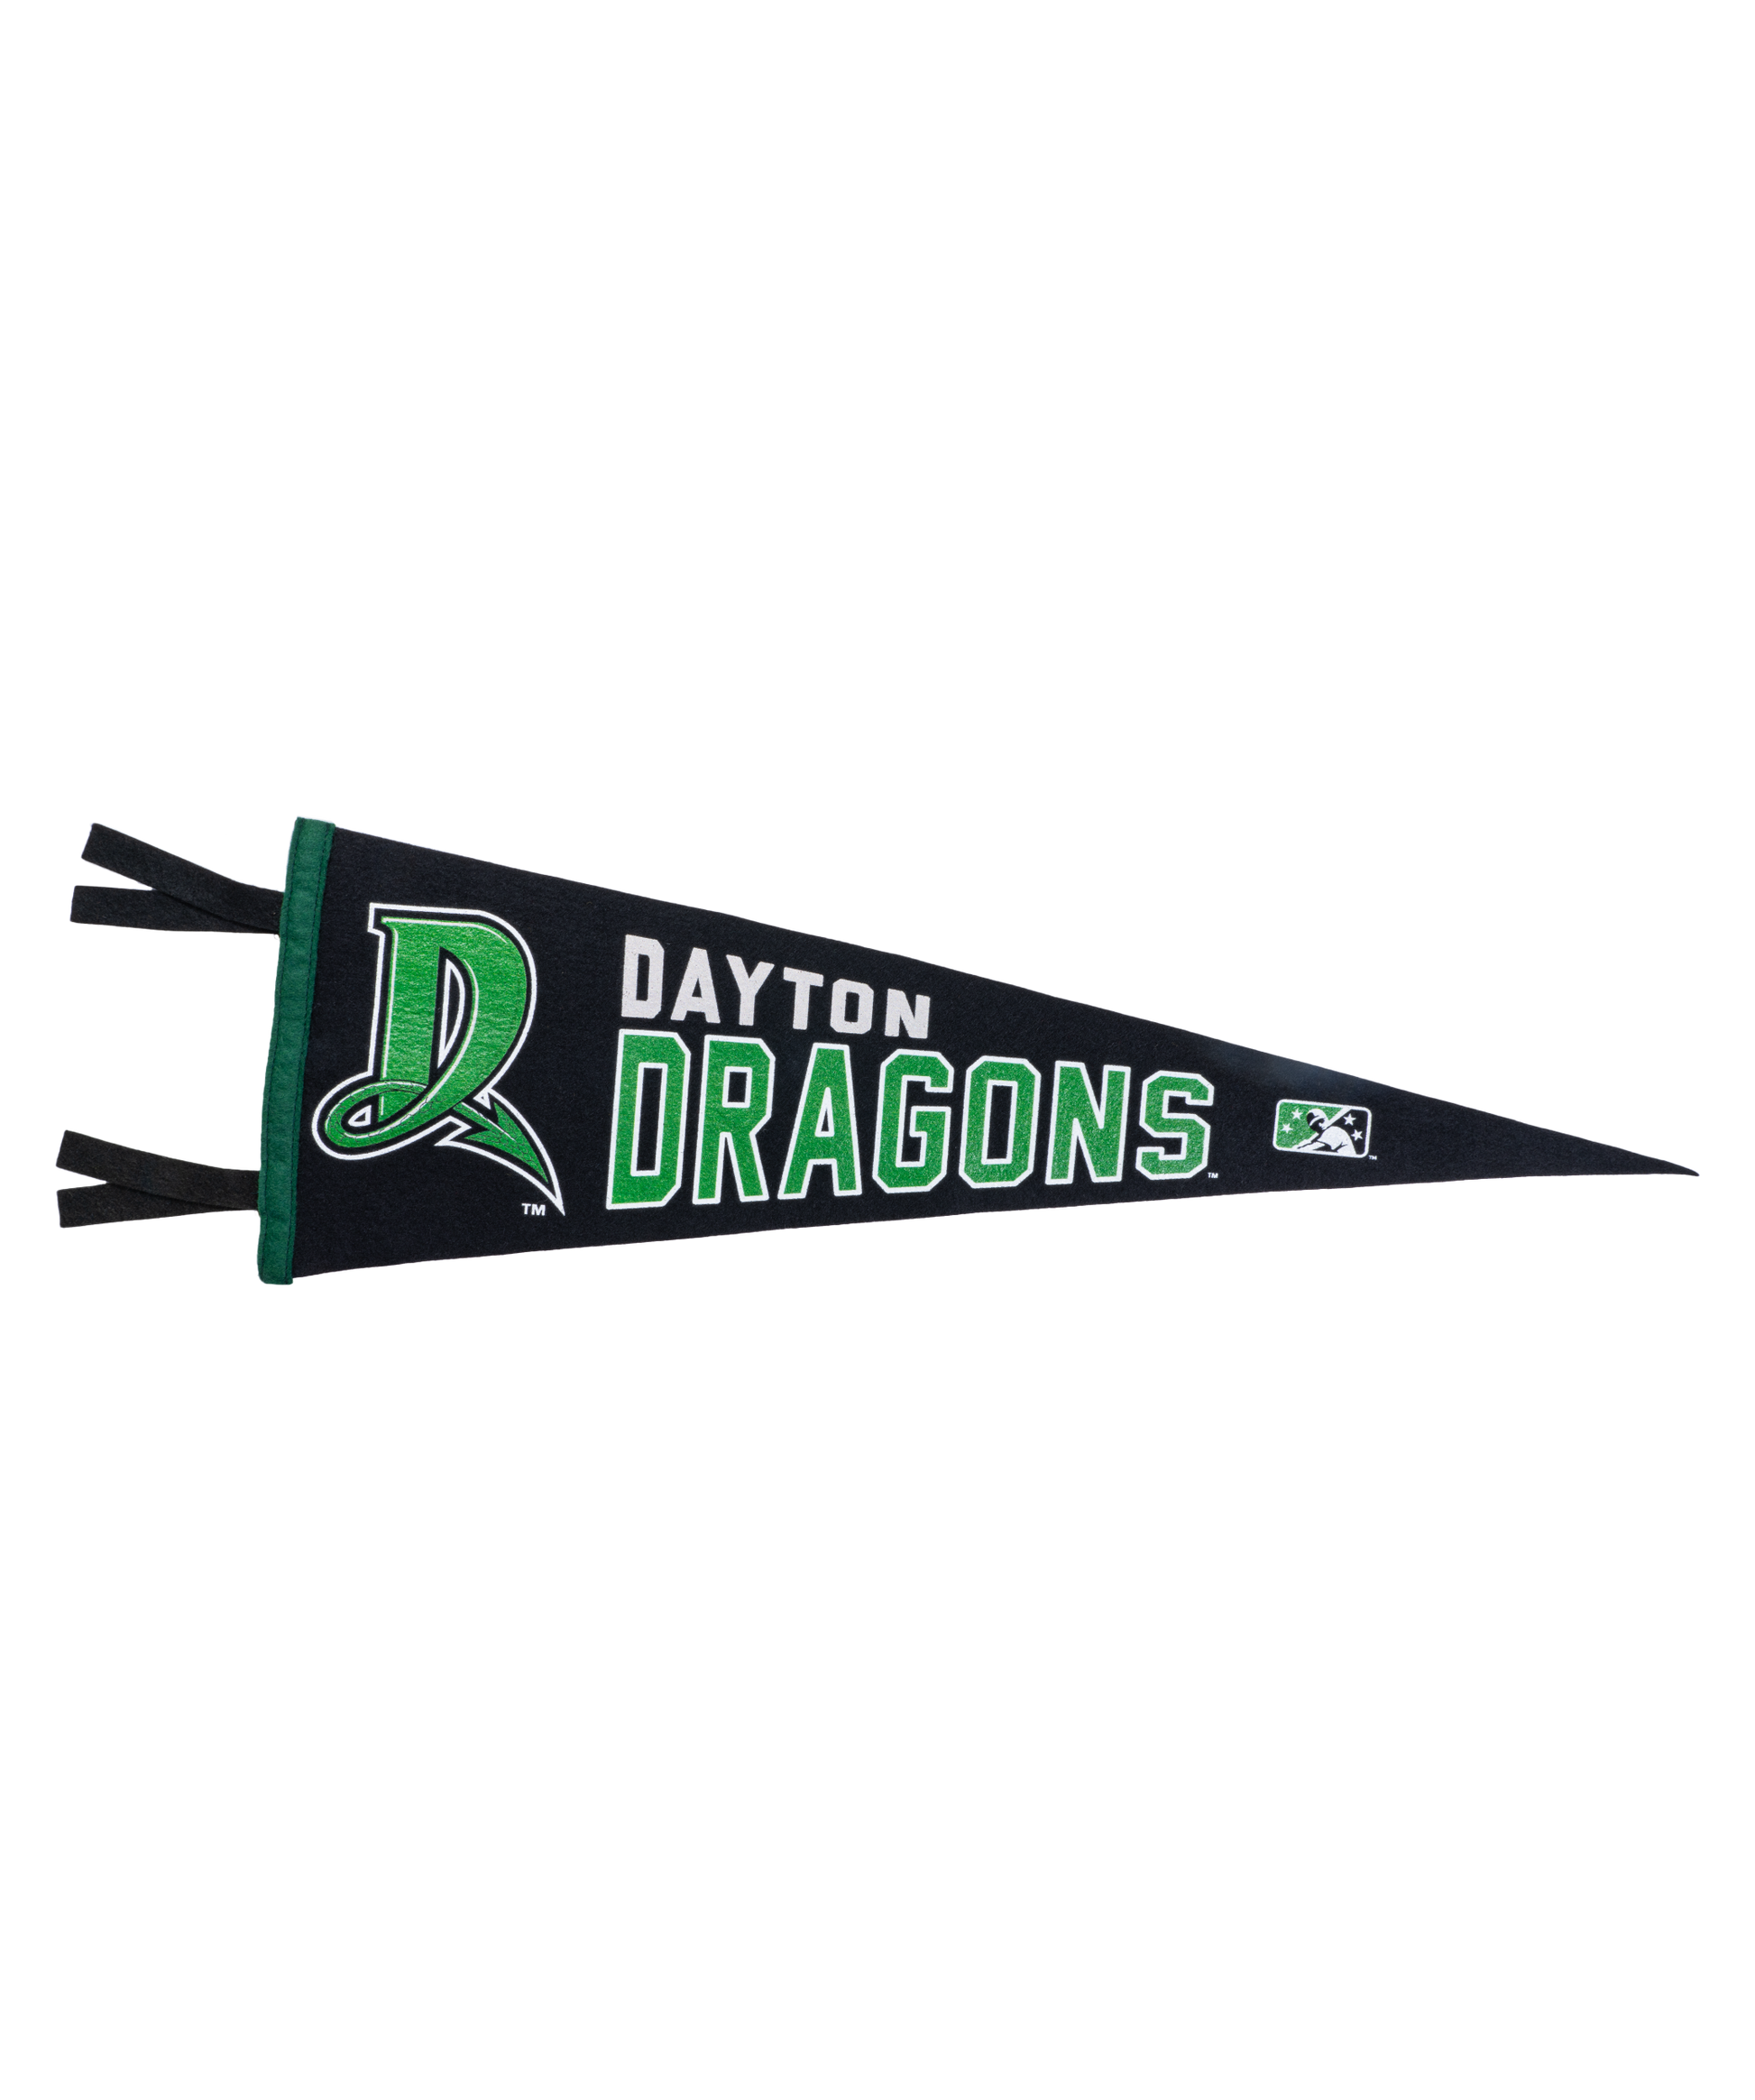 Dayton Dragons Pennant | MiLB x Oxford Pennant